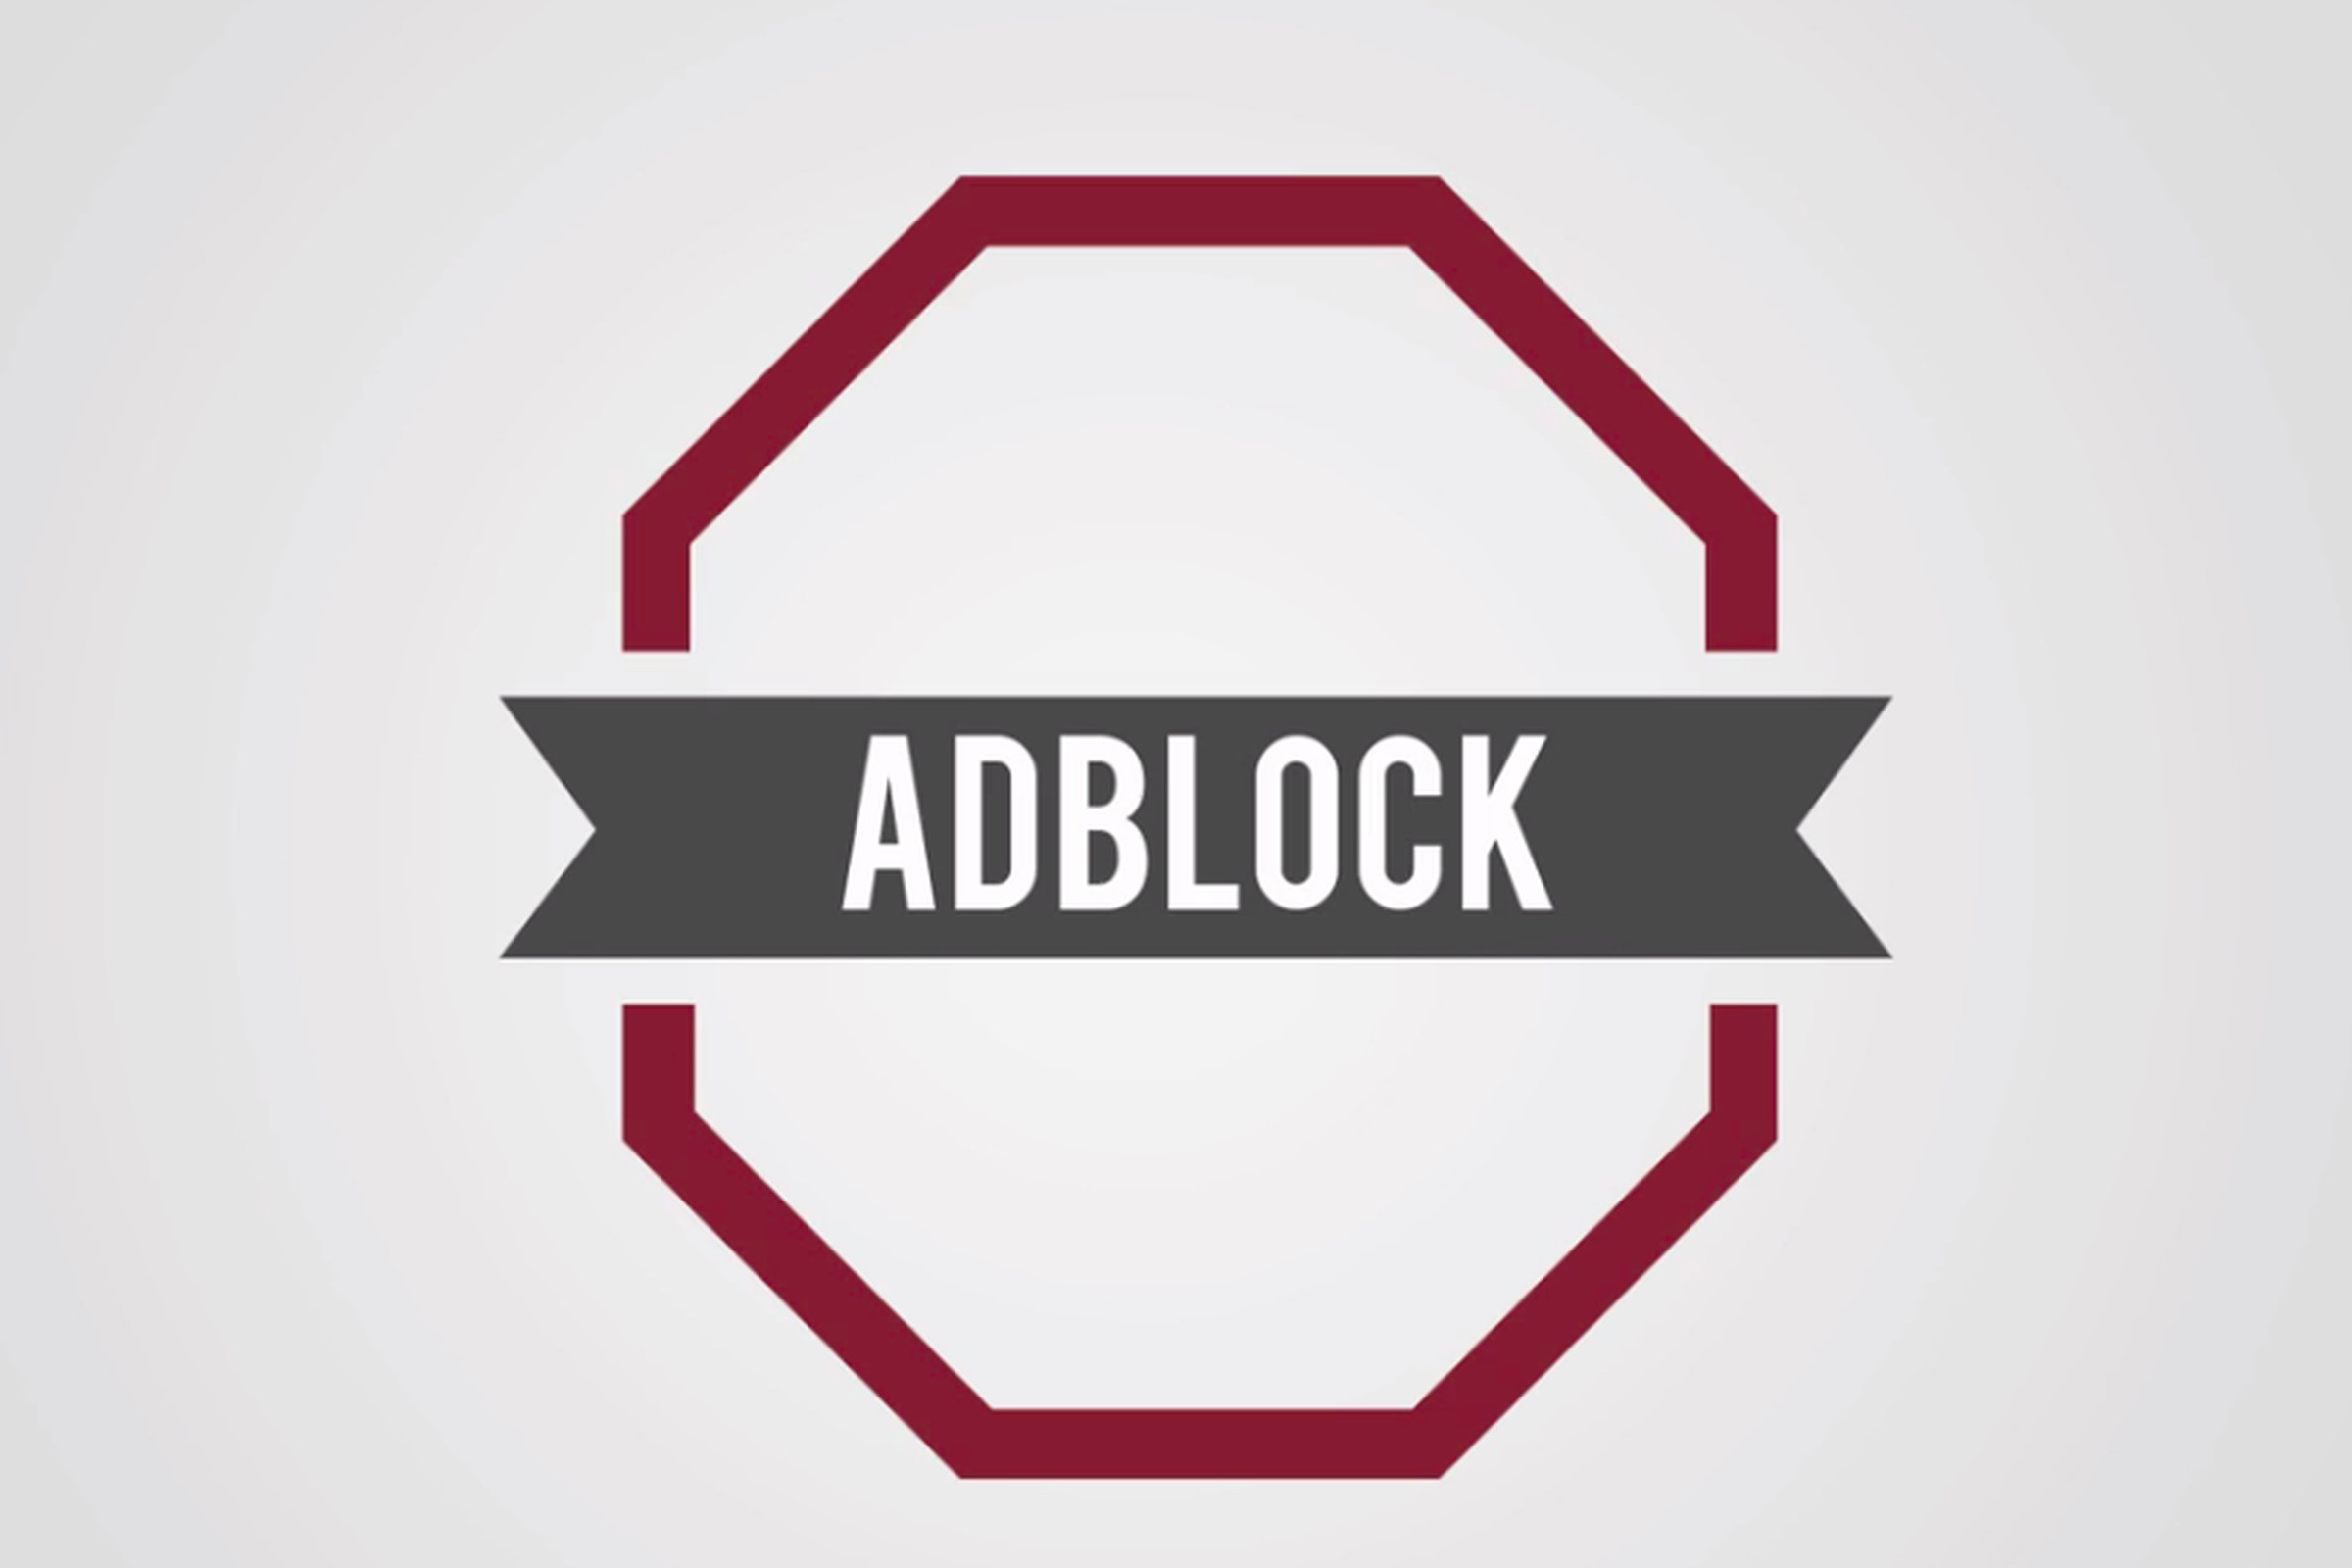 Adblock explorer. ADBLOCK. Логотип ADBLOCK. Блокировщик рекламы. Иконка блокировка рекламы.